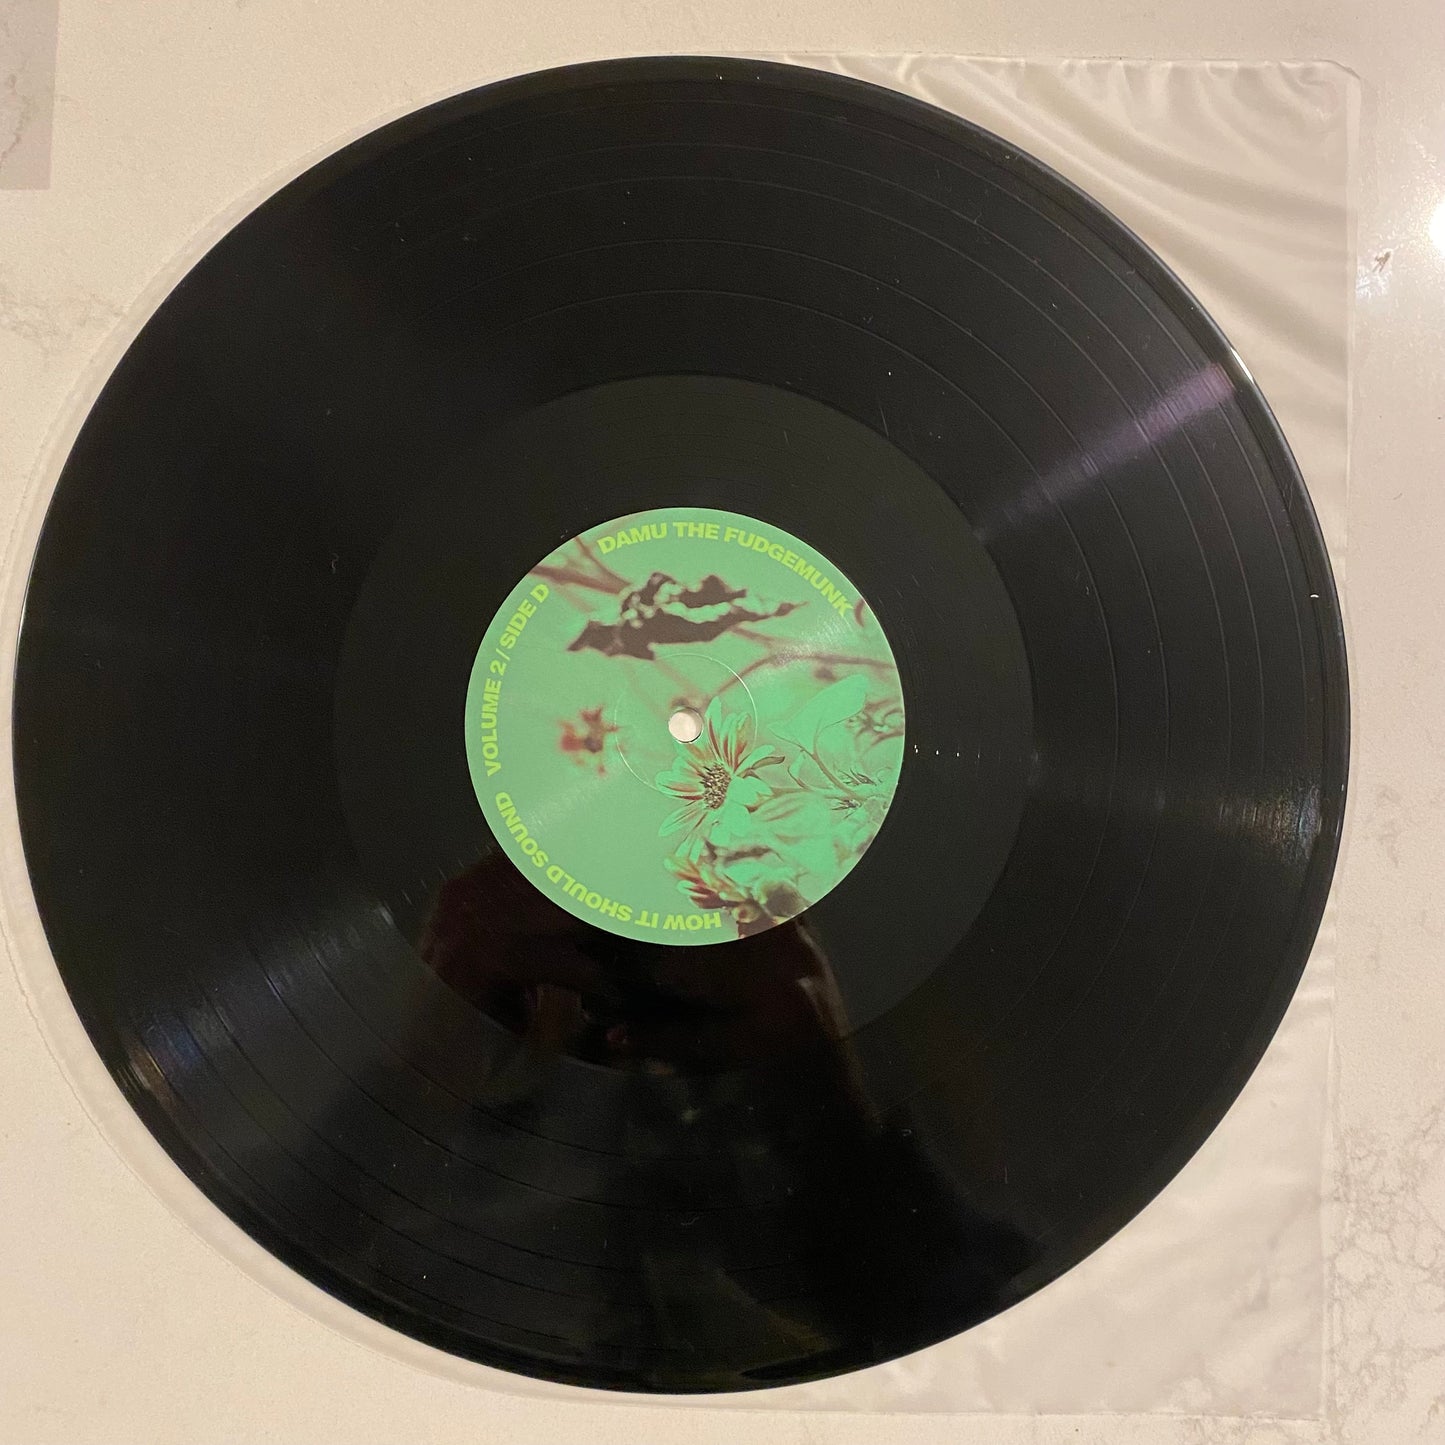 Damu The Fudgemunk - How It Should Sound Volume 1 & 2 (2xLP, Album, RE, RM). HIP-HOP